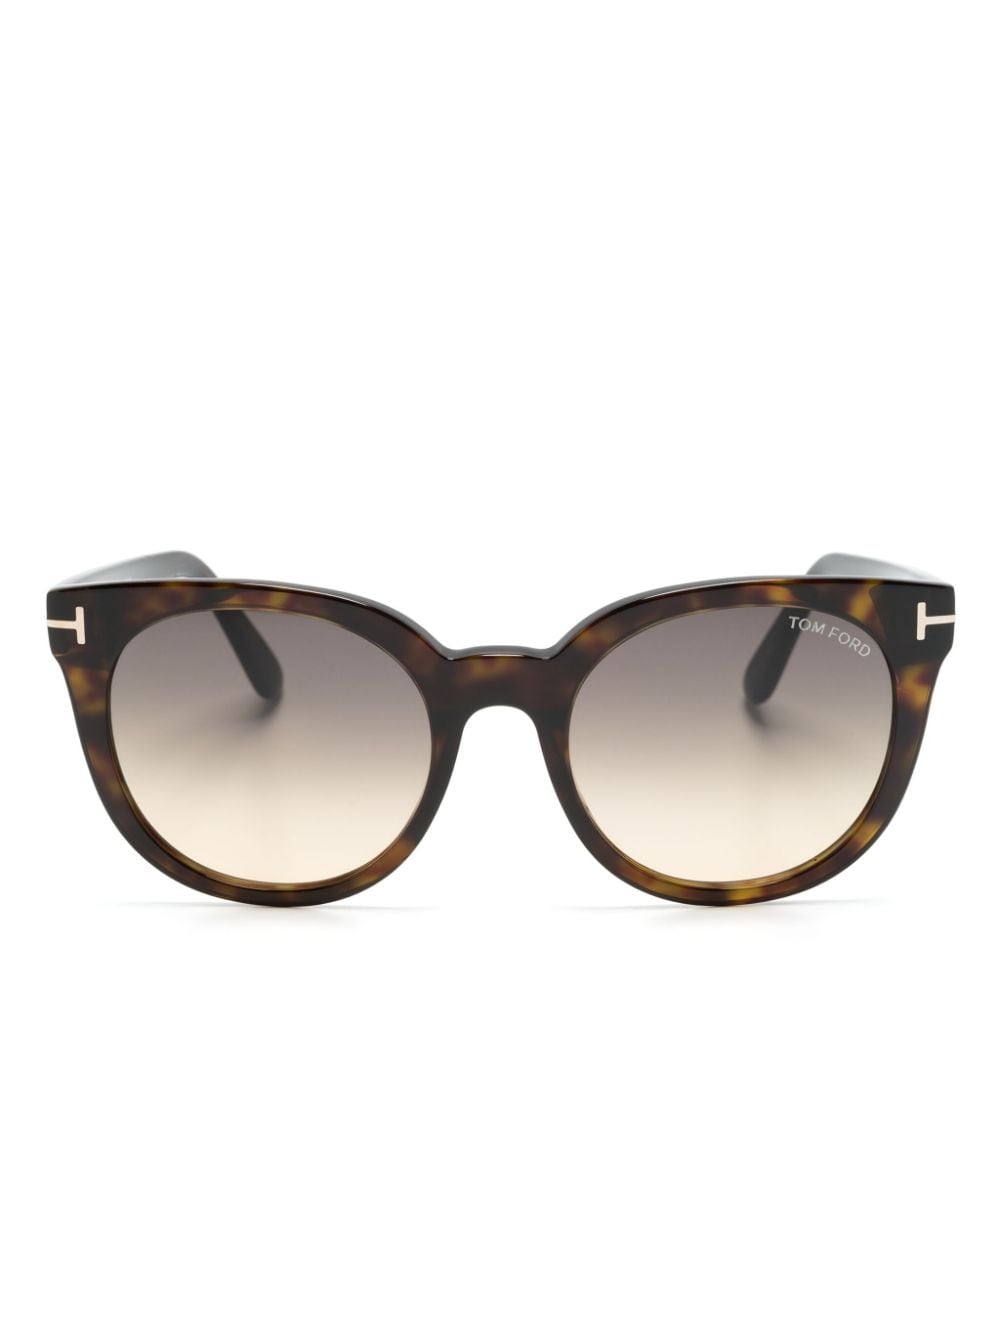 TOM FORD Eyewear Moira round-frame sunglasses - Braun von TOM FORD Eyewear